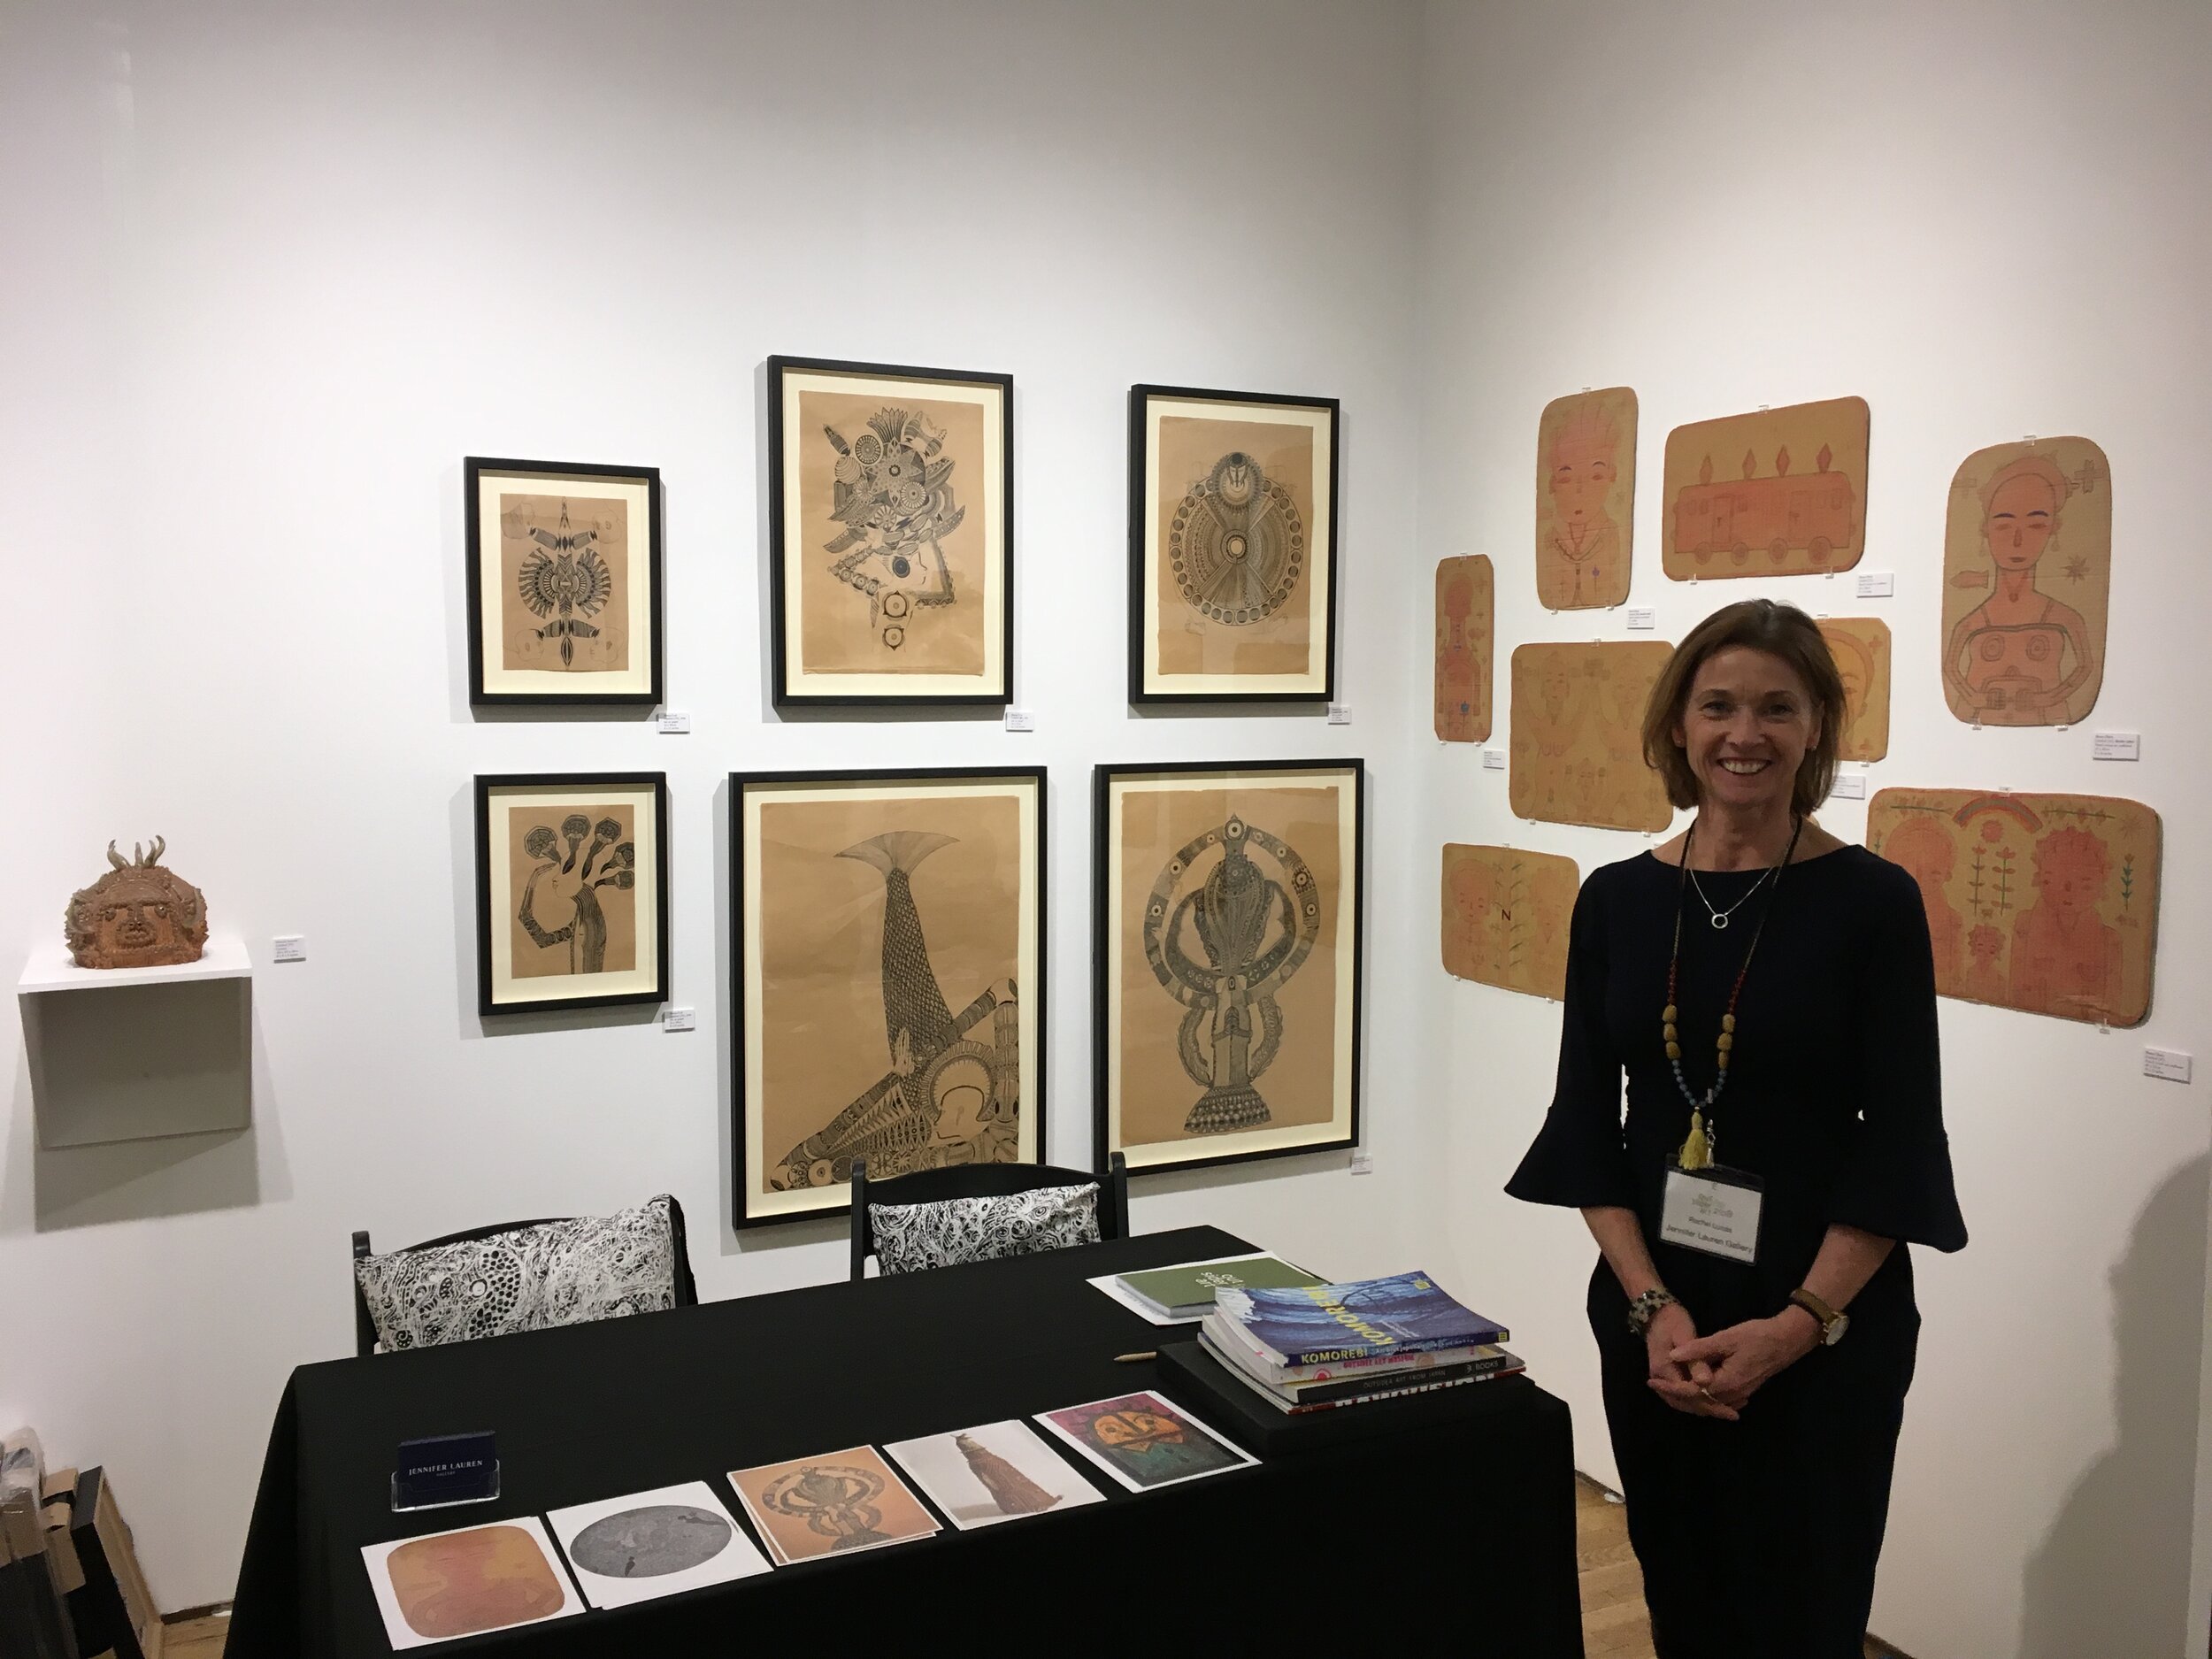   Rachel Lucas helping at Outsider Art Fair New York 2018  